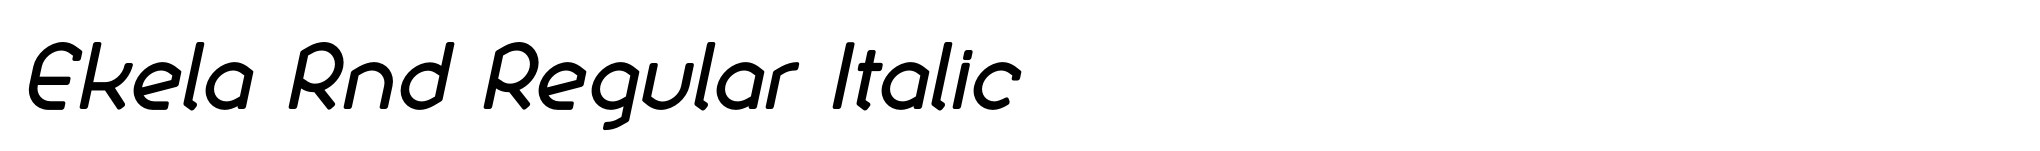 Ekela Rnd Regular Italic image